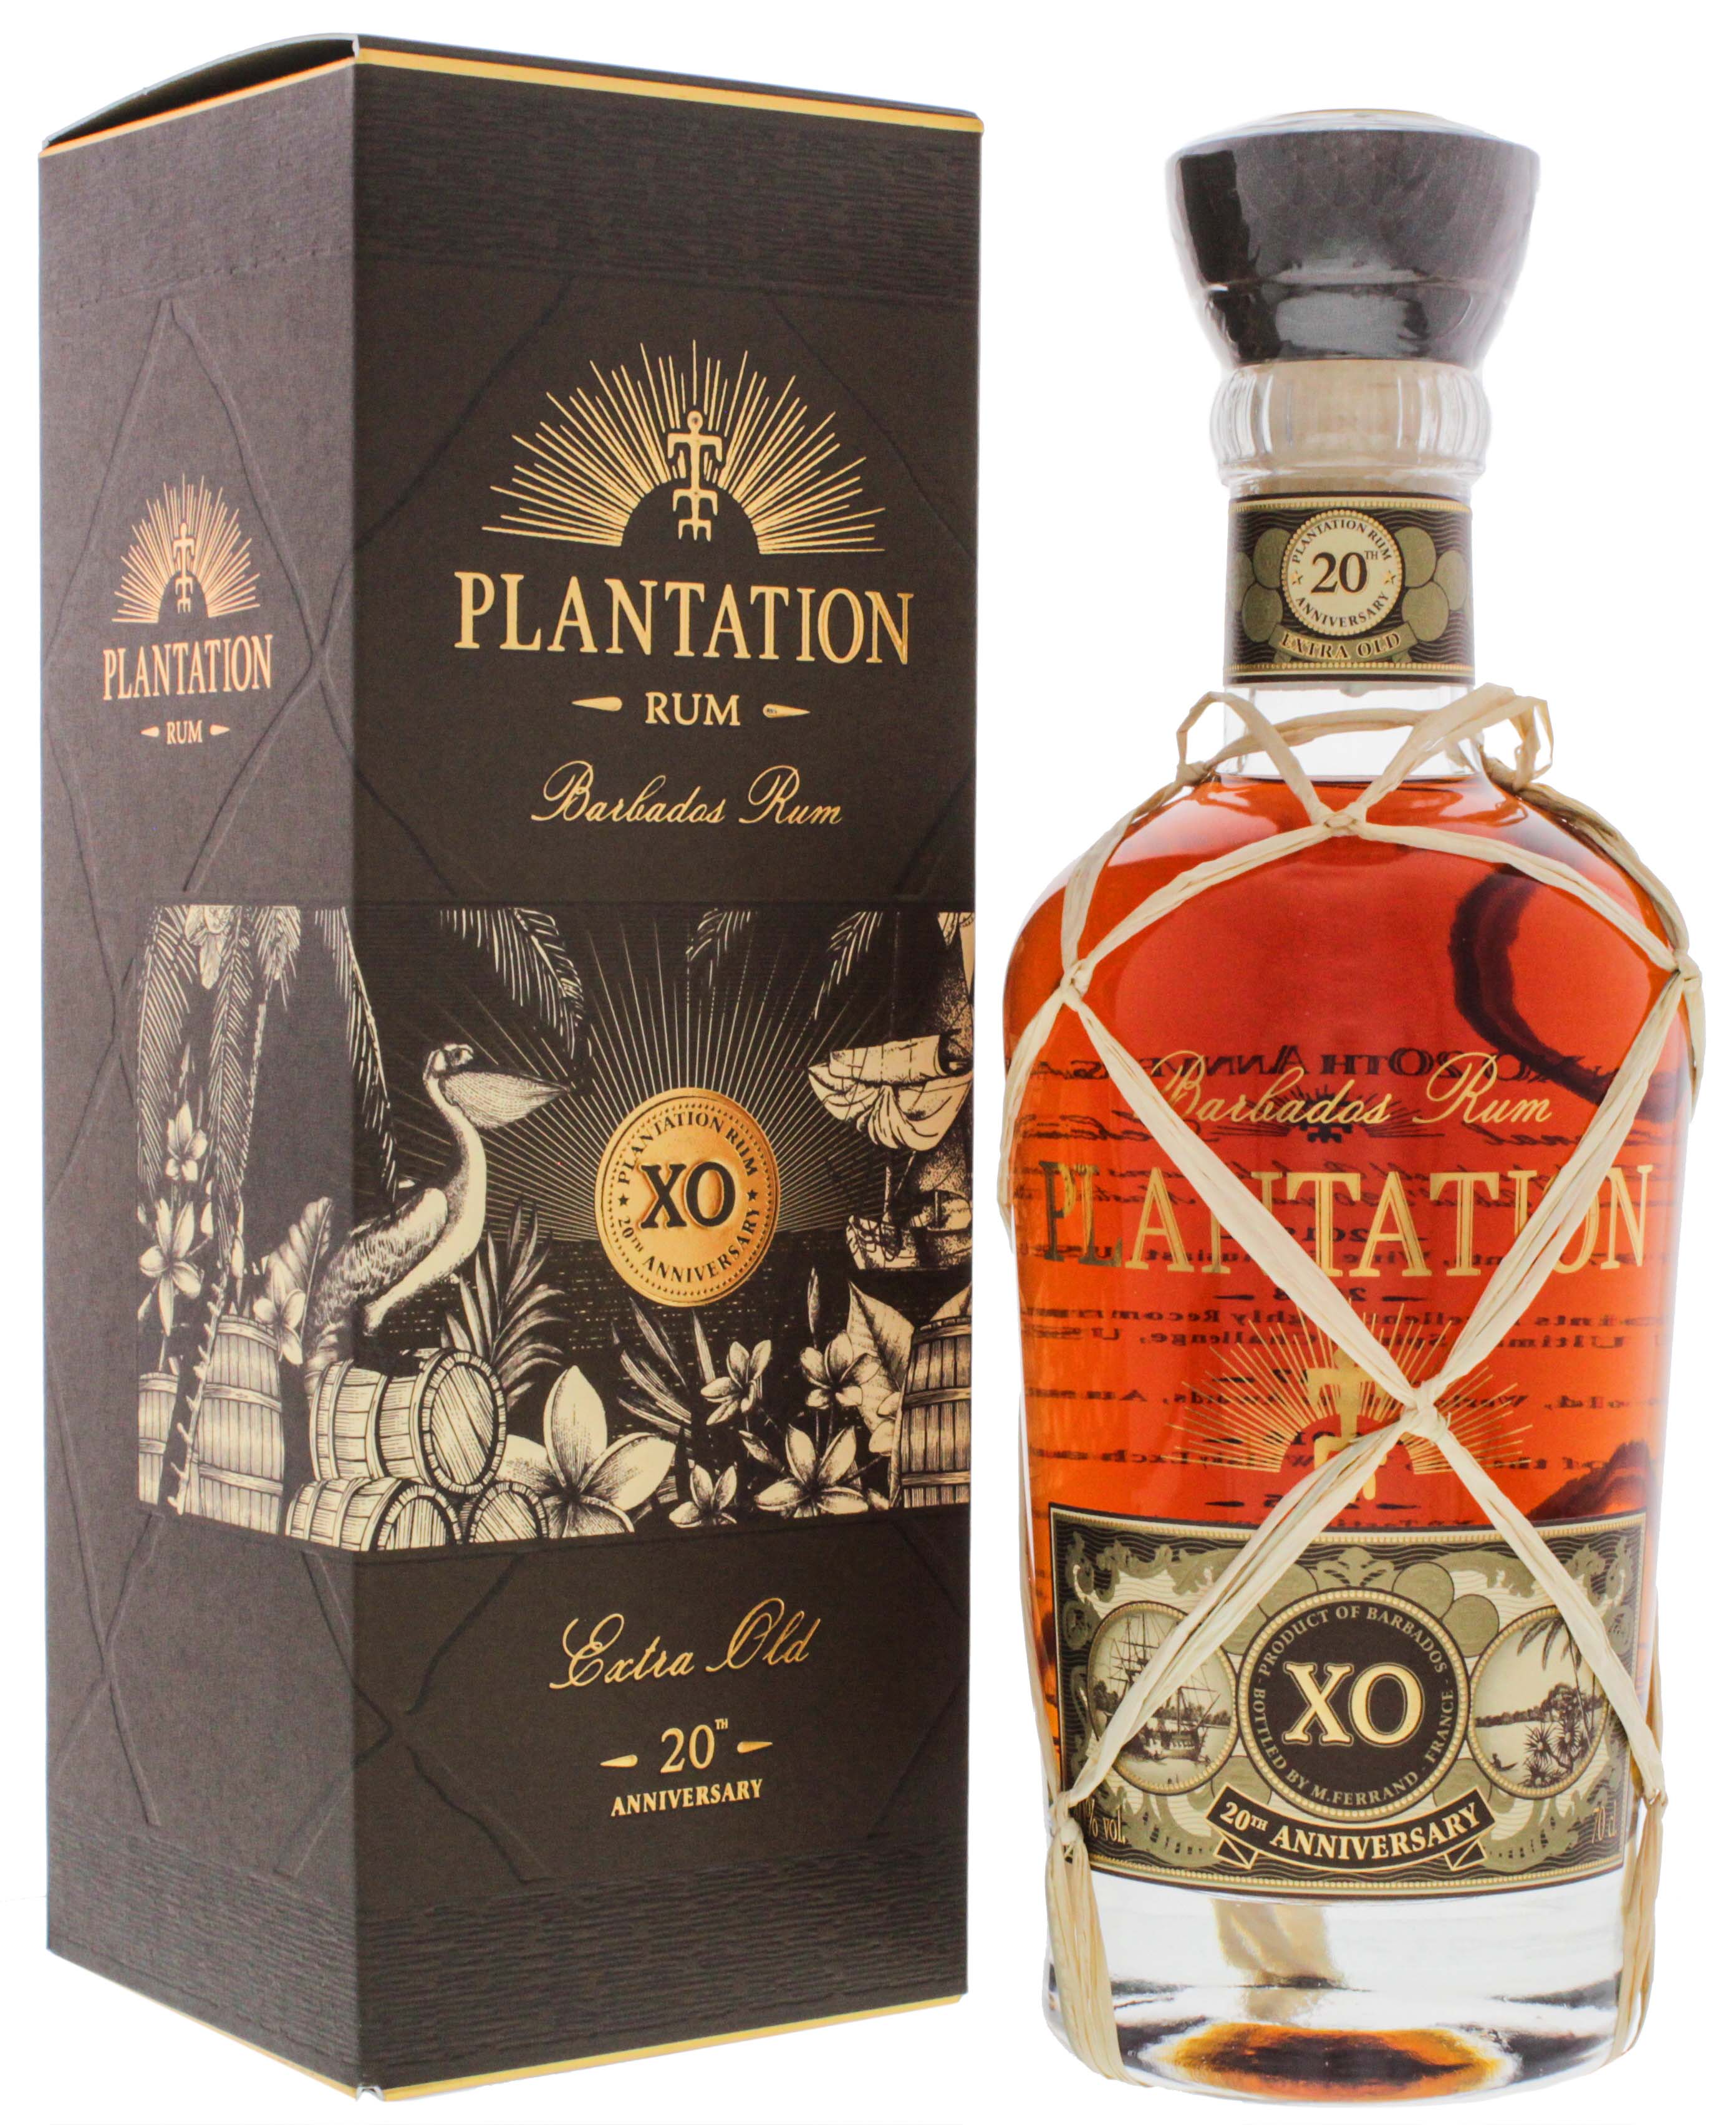 Plantation Shop Extra Rum 20th Rum Online Anniversary kaufen! Barbados Old